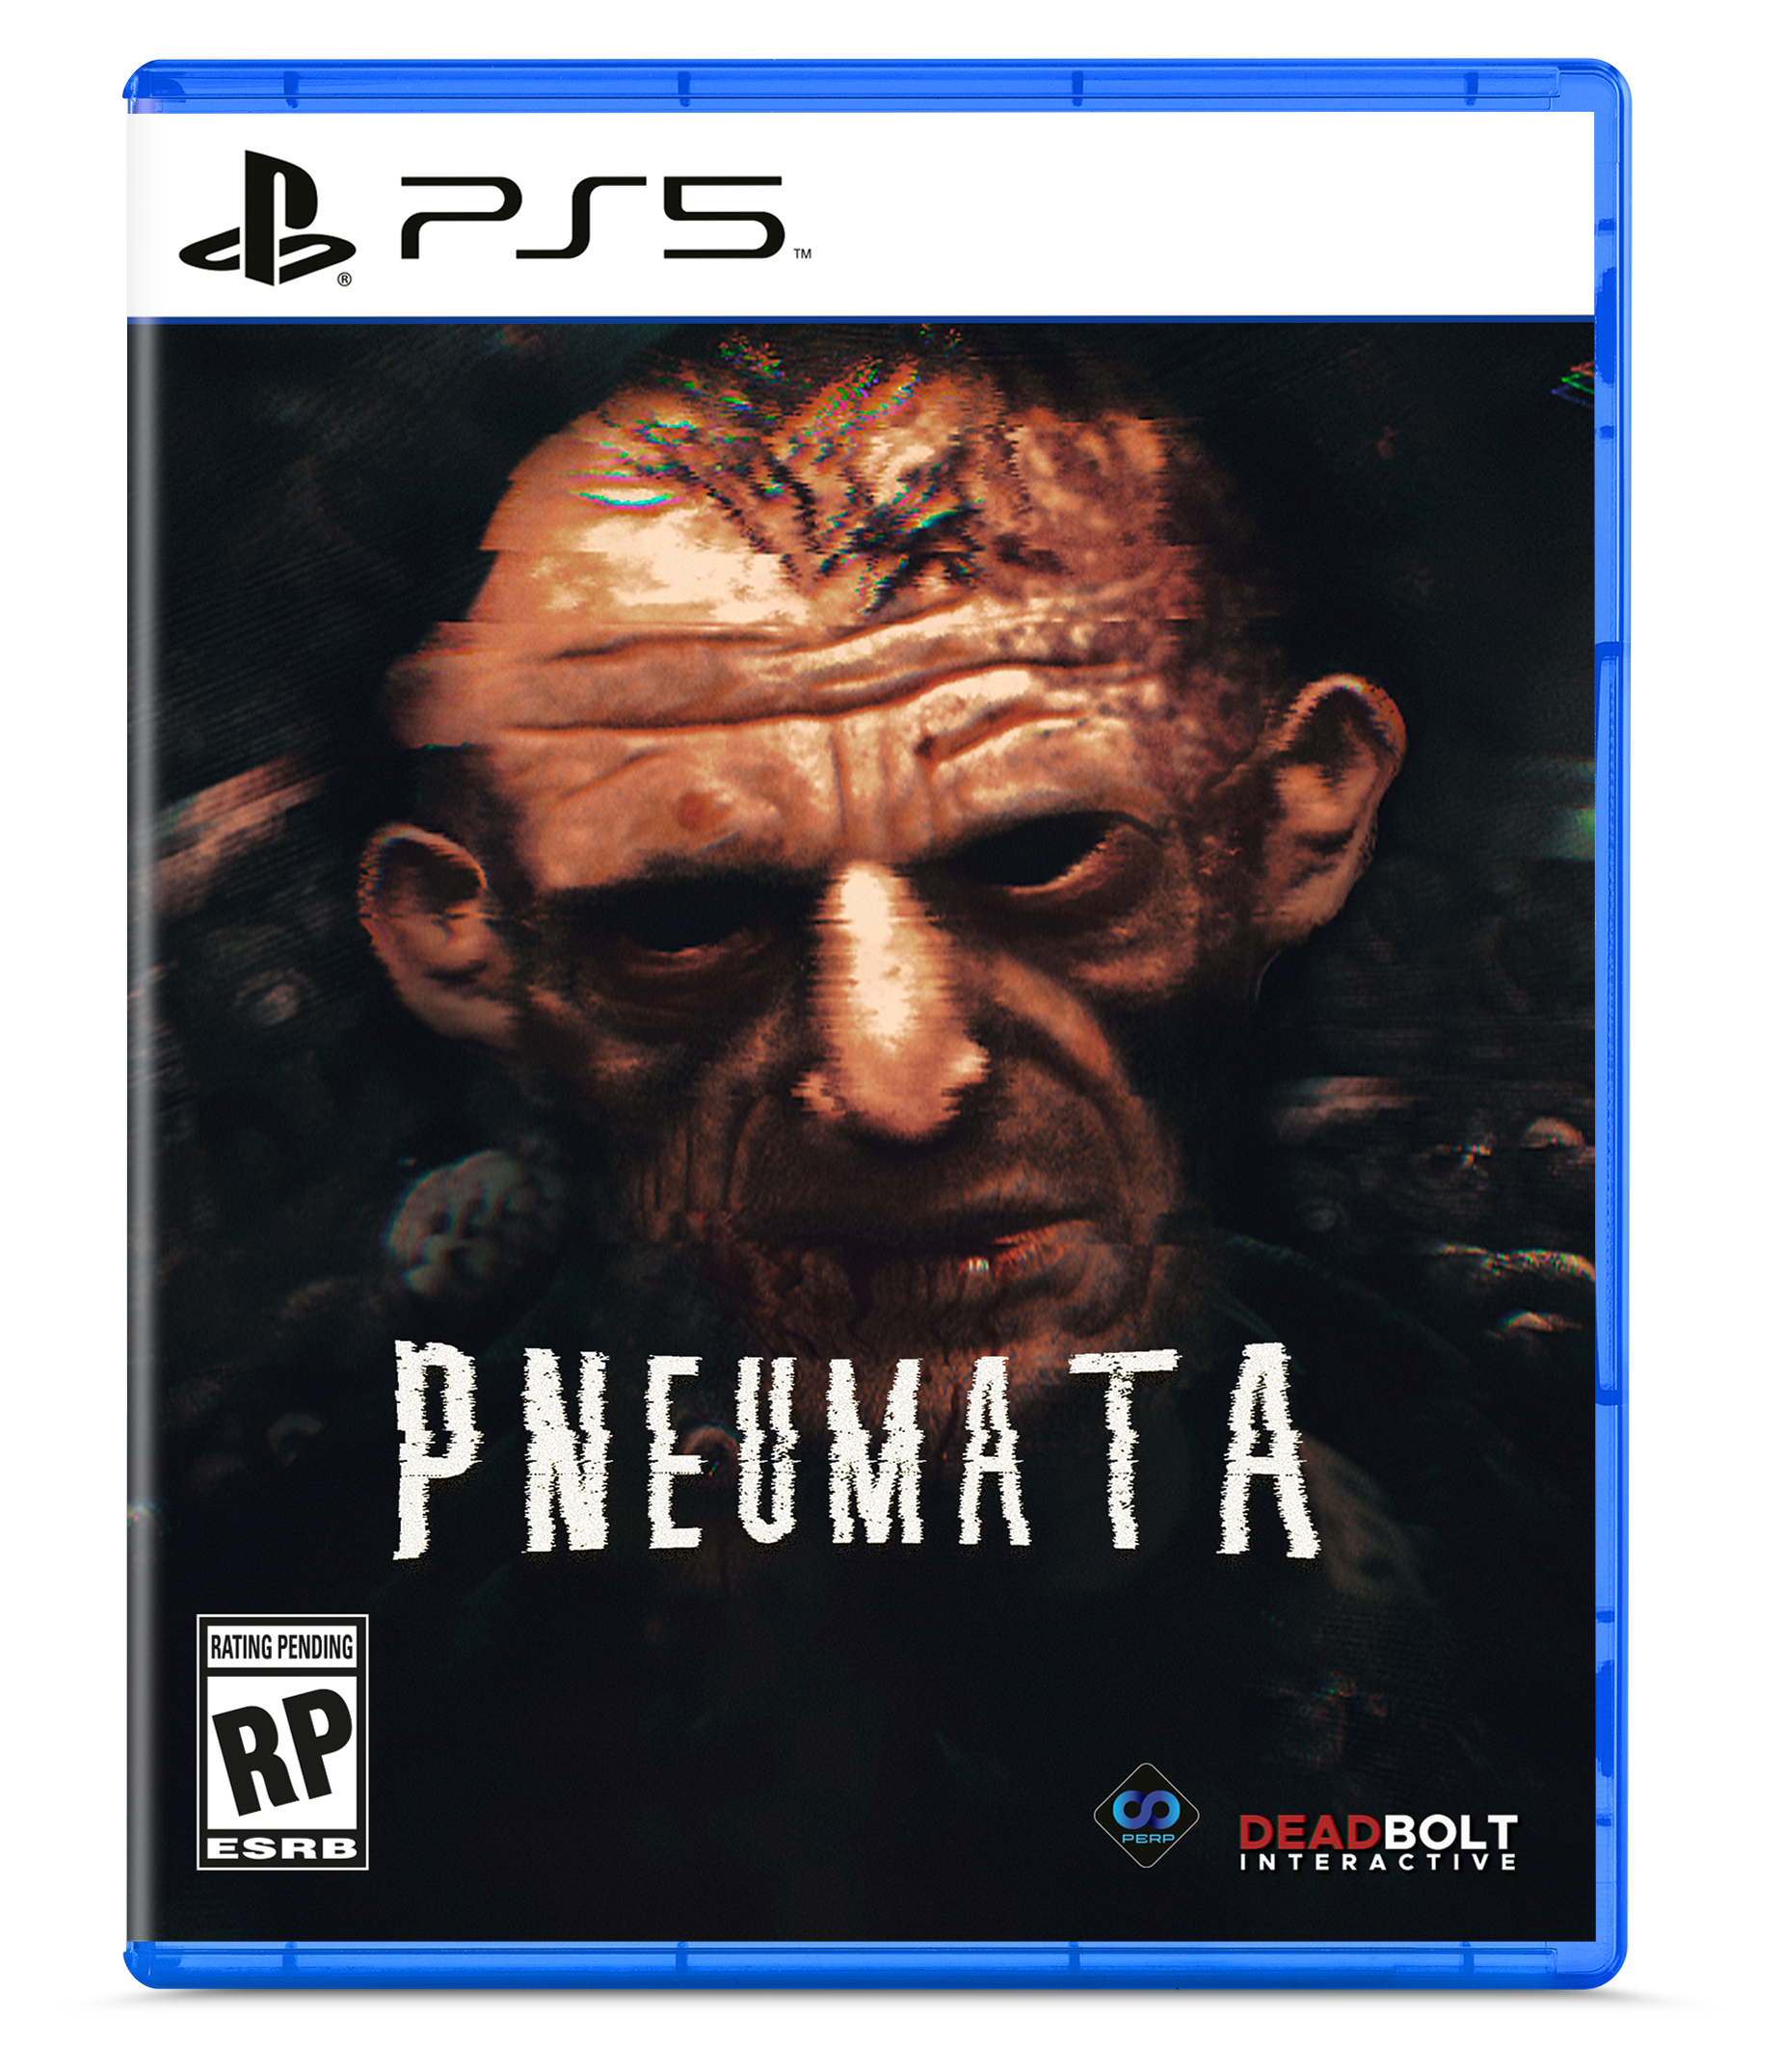 Pneumata - PlayStation 5